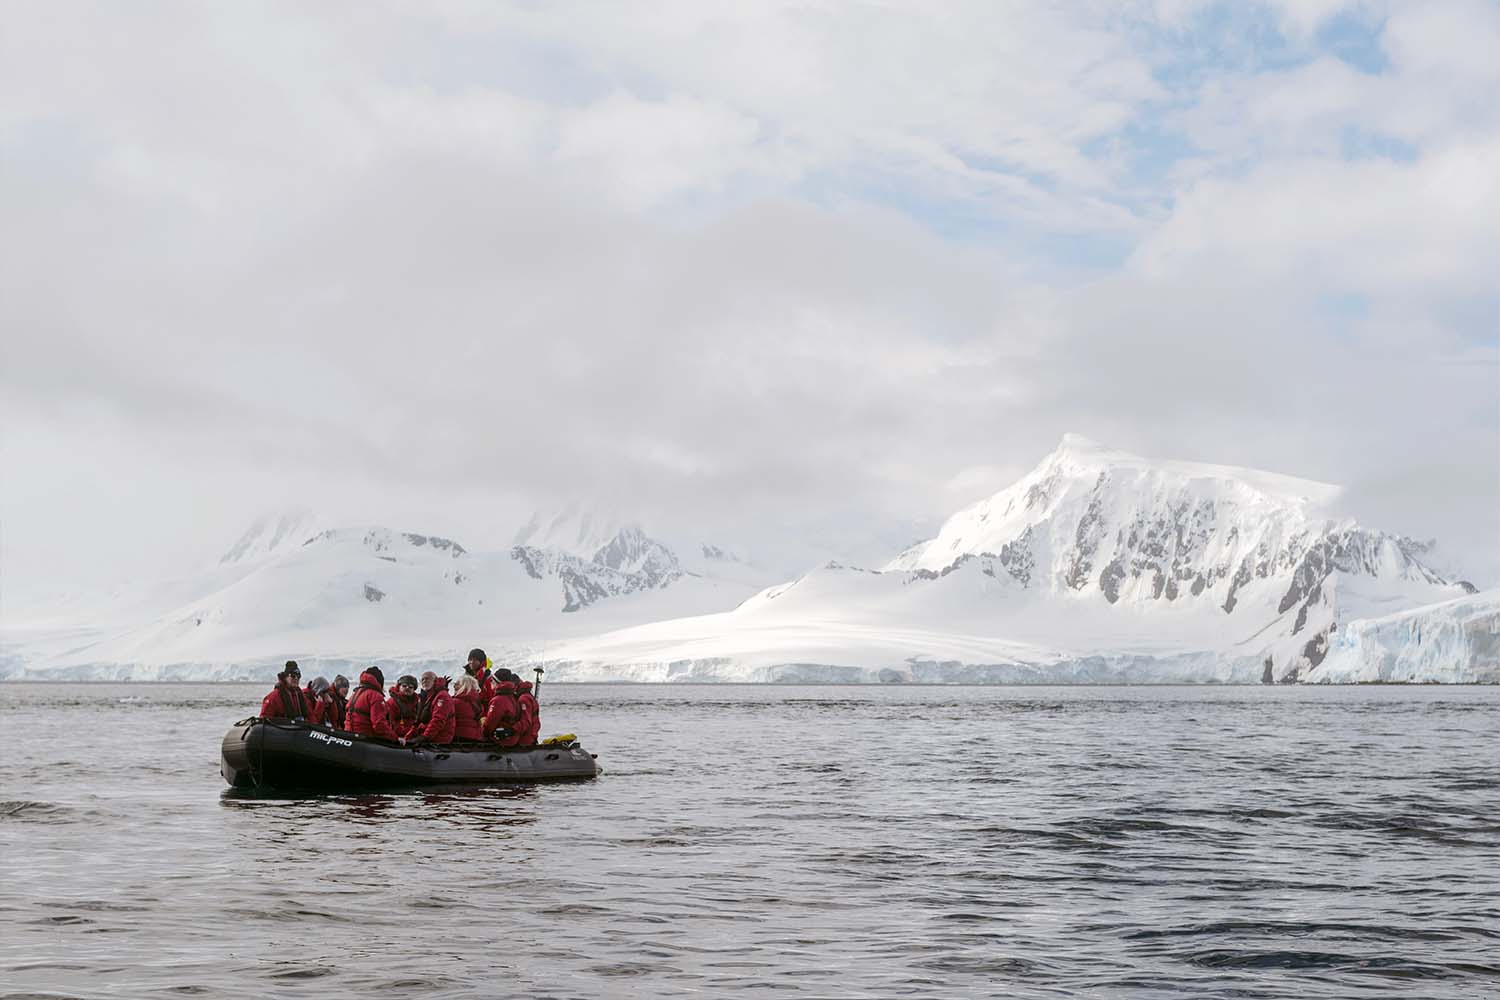 The Zodiacs zip around icebergs and inch up close to massive glaciers